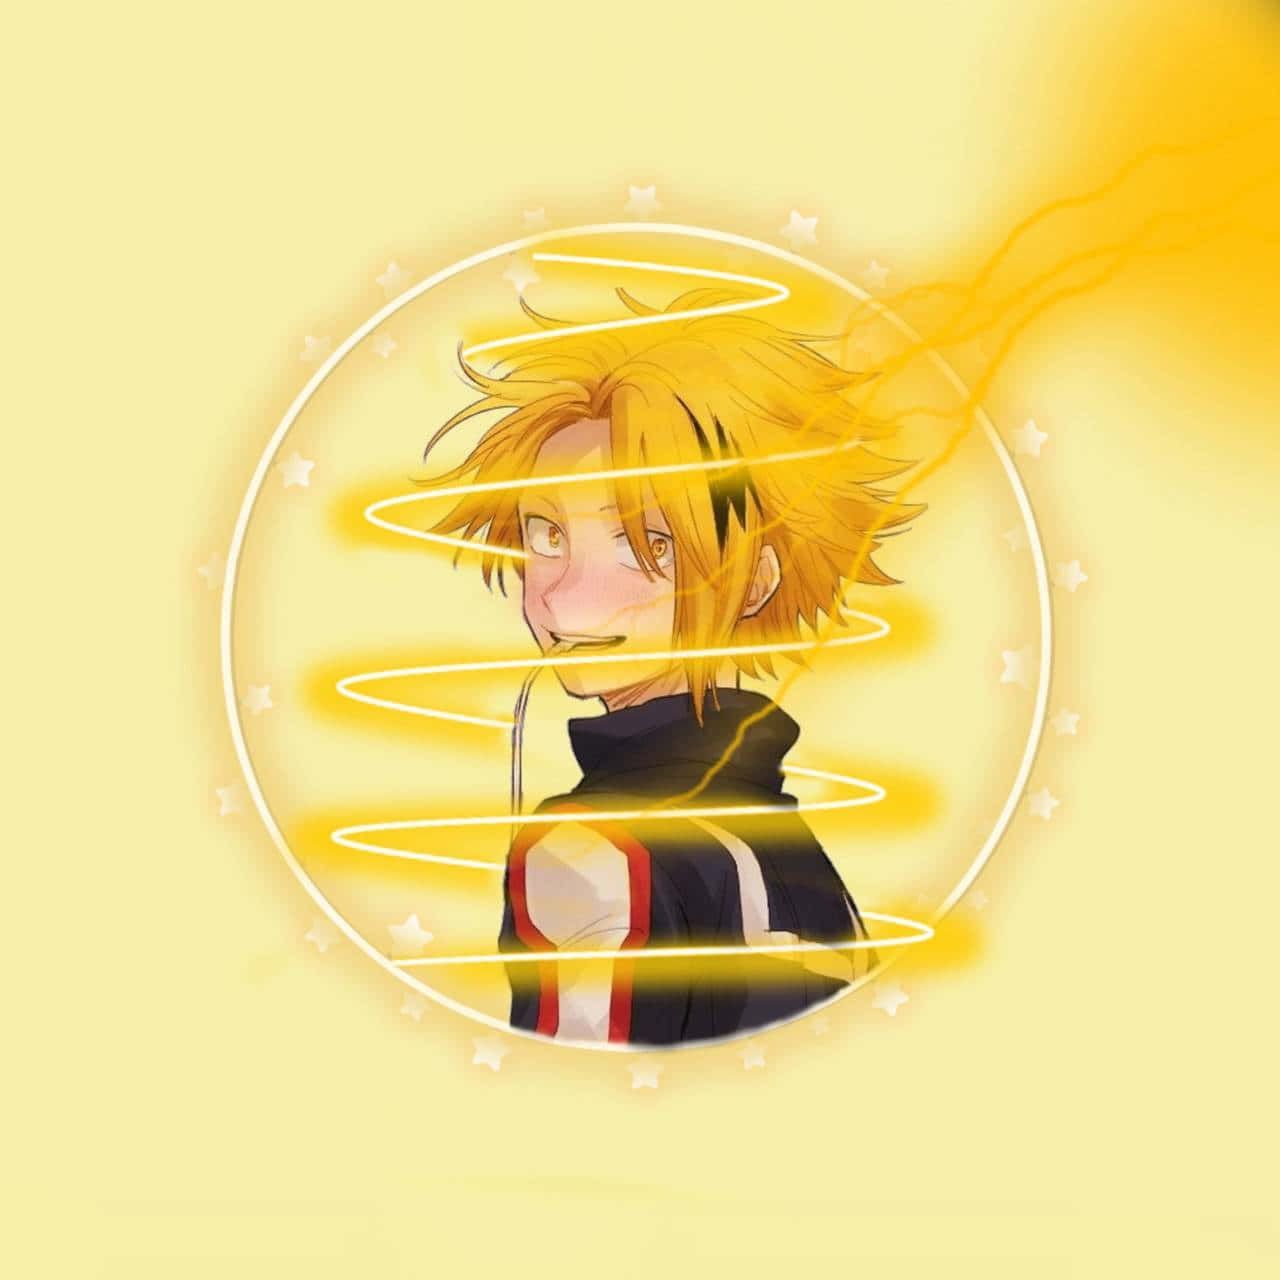 Katsuki Bakugo with his power in the form of flames - Denki Kaminari